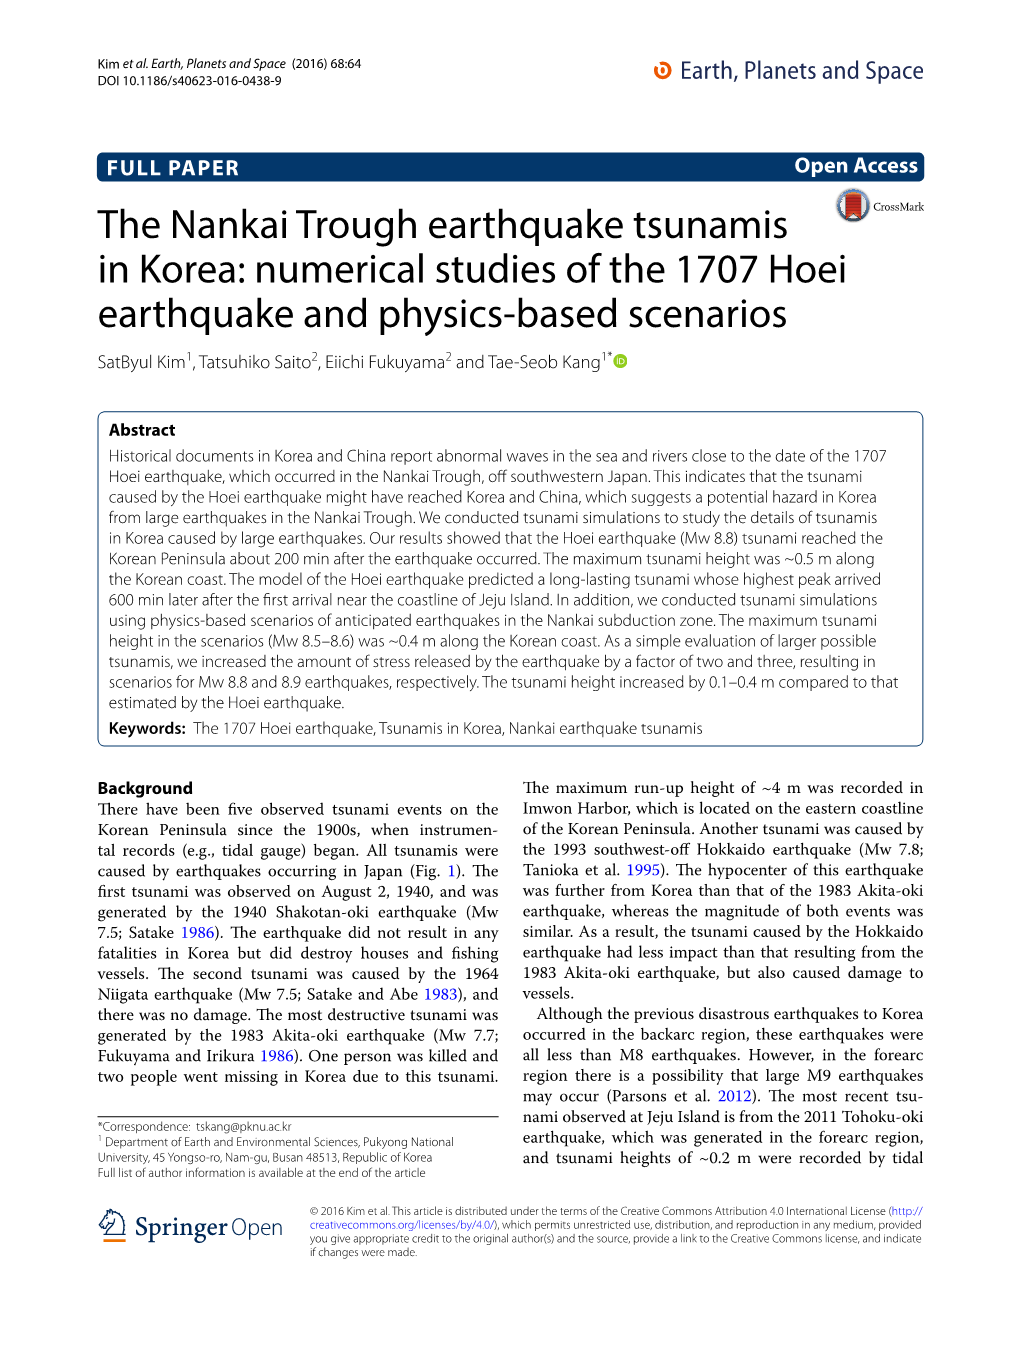 The Nankai Trough Earthquake Tsunamis in Korea: Numerical Studies of the 1707 Hoei Earthquake and Physics-Based Scenarios